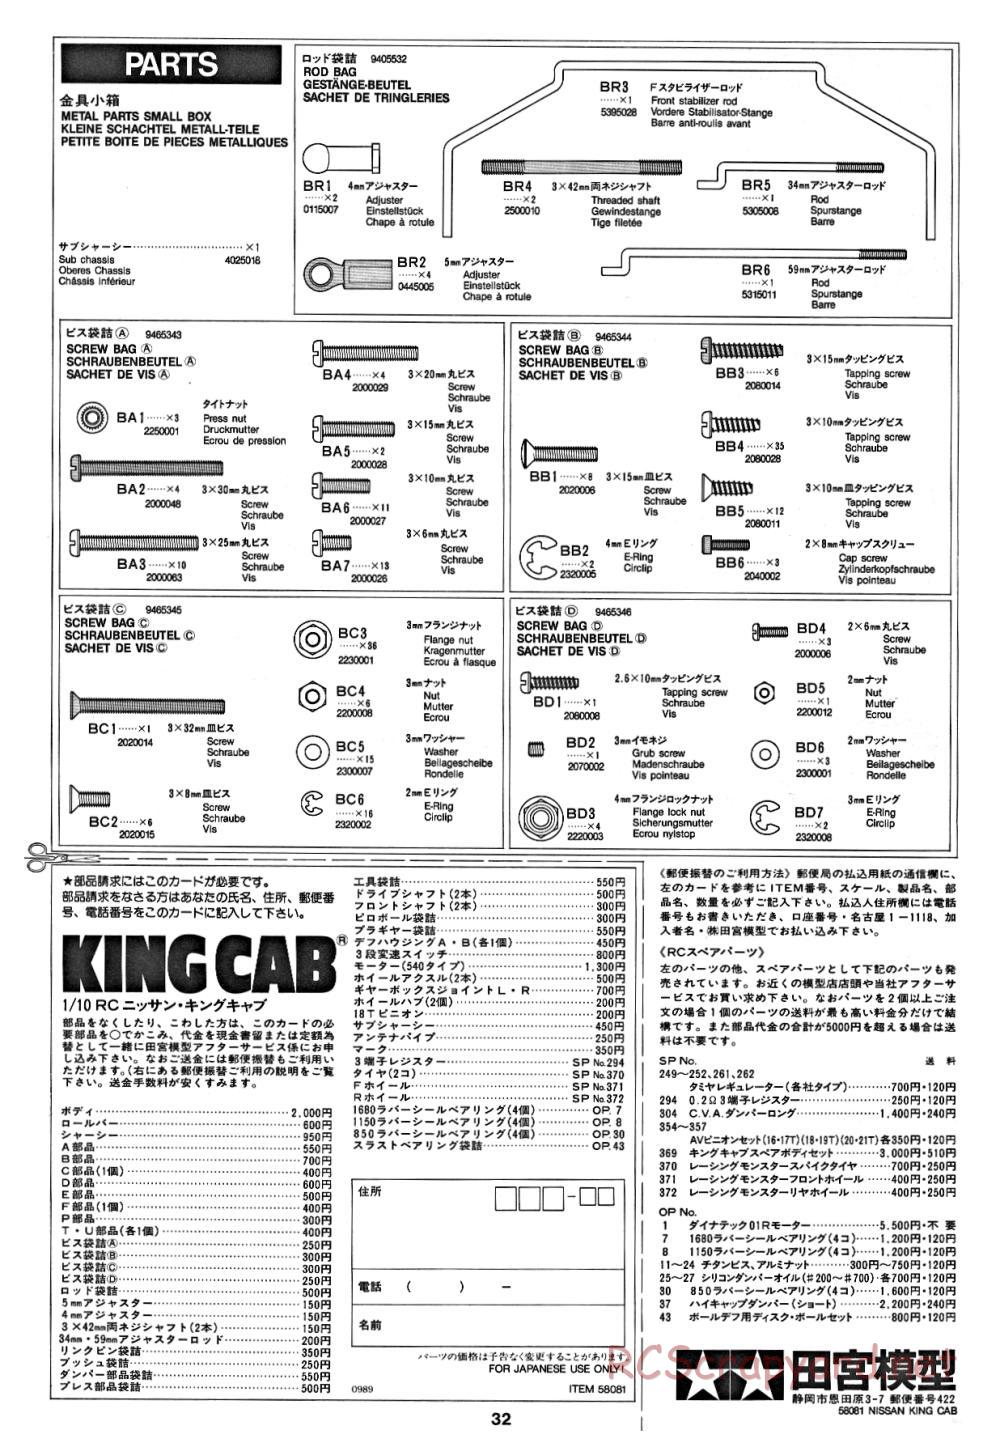 Tamiya - Nissan King Cab - 58081 - Manual - Page 32